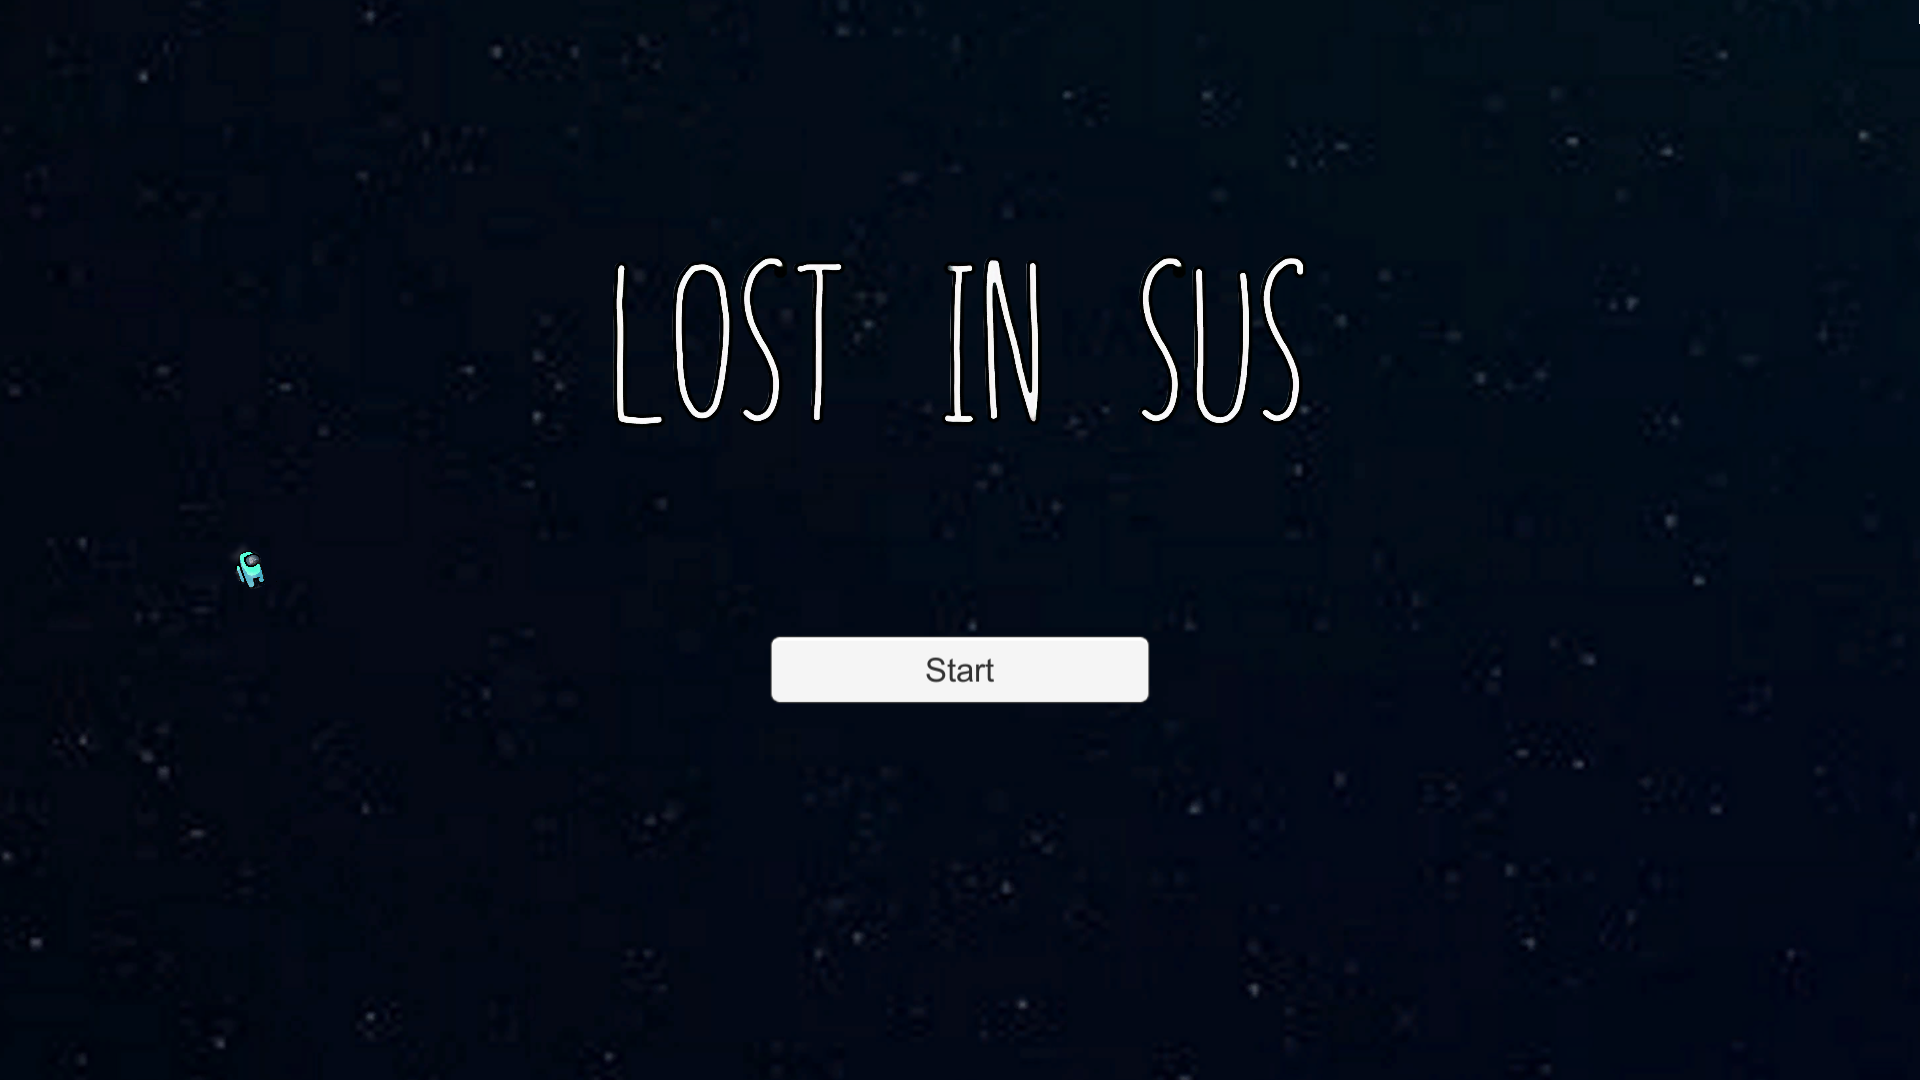 Lost in sus